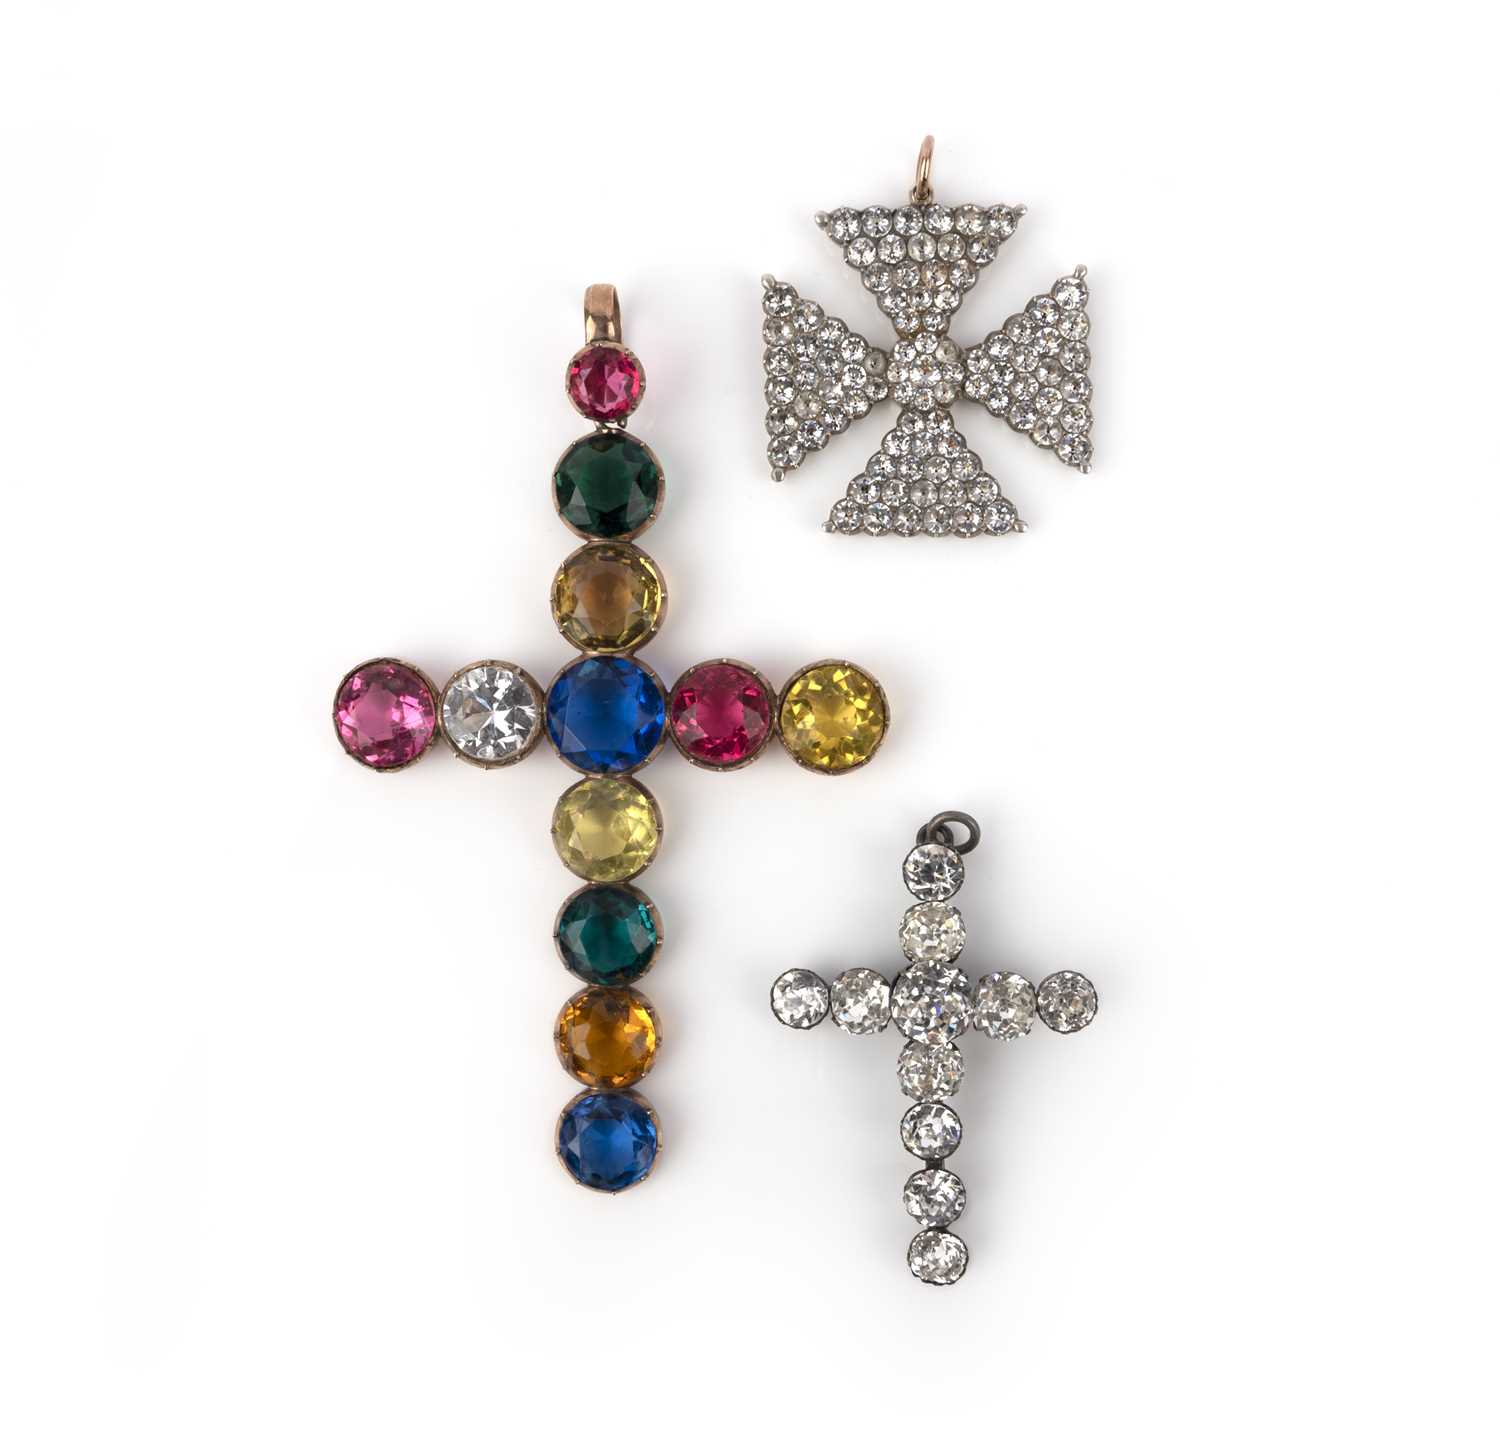 Three paste cross pendants, 19th century, comprising: one cross pendant set with multicoloured